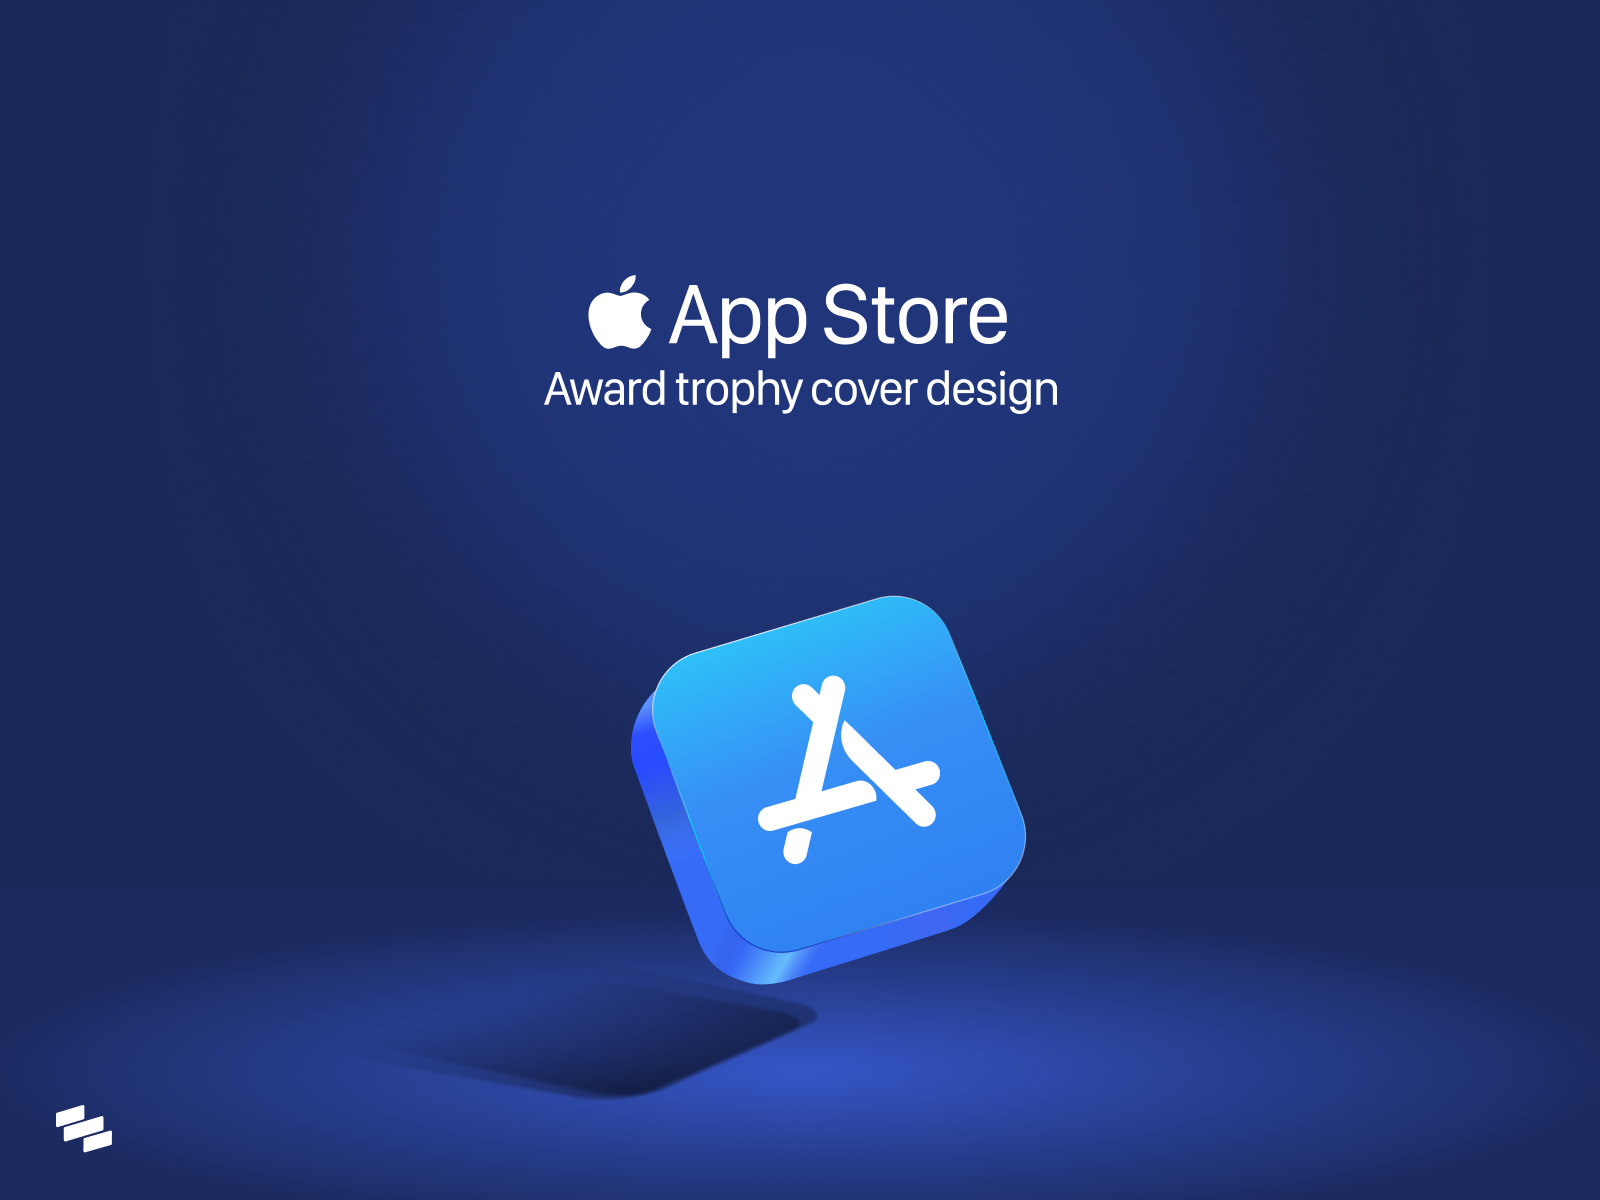 Apple App Store Awards Trophy Cover Design by Erkhembayar on Dribbble